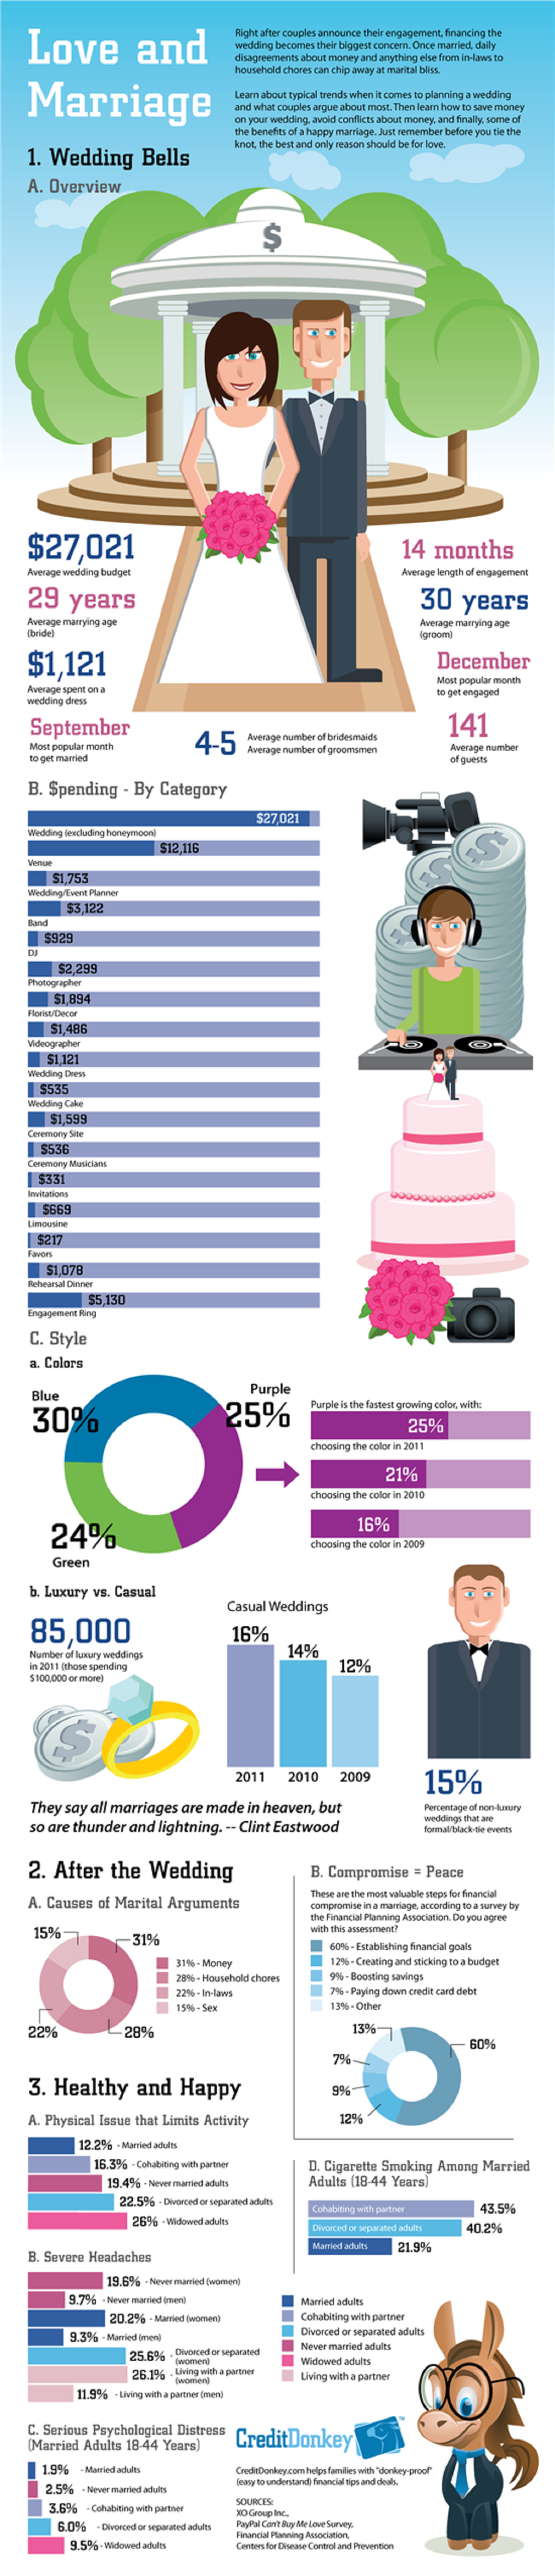 marriage-statistics-infographic